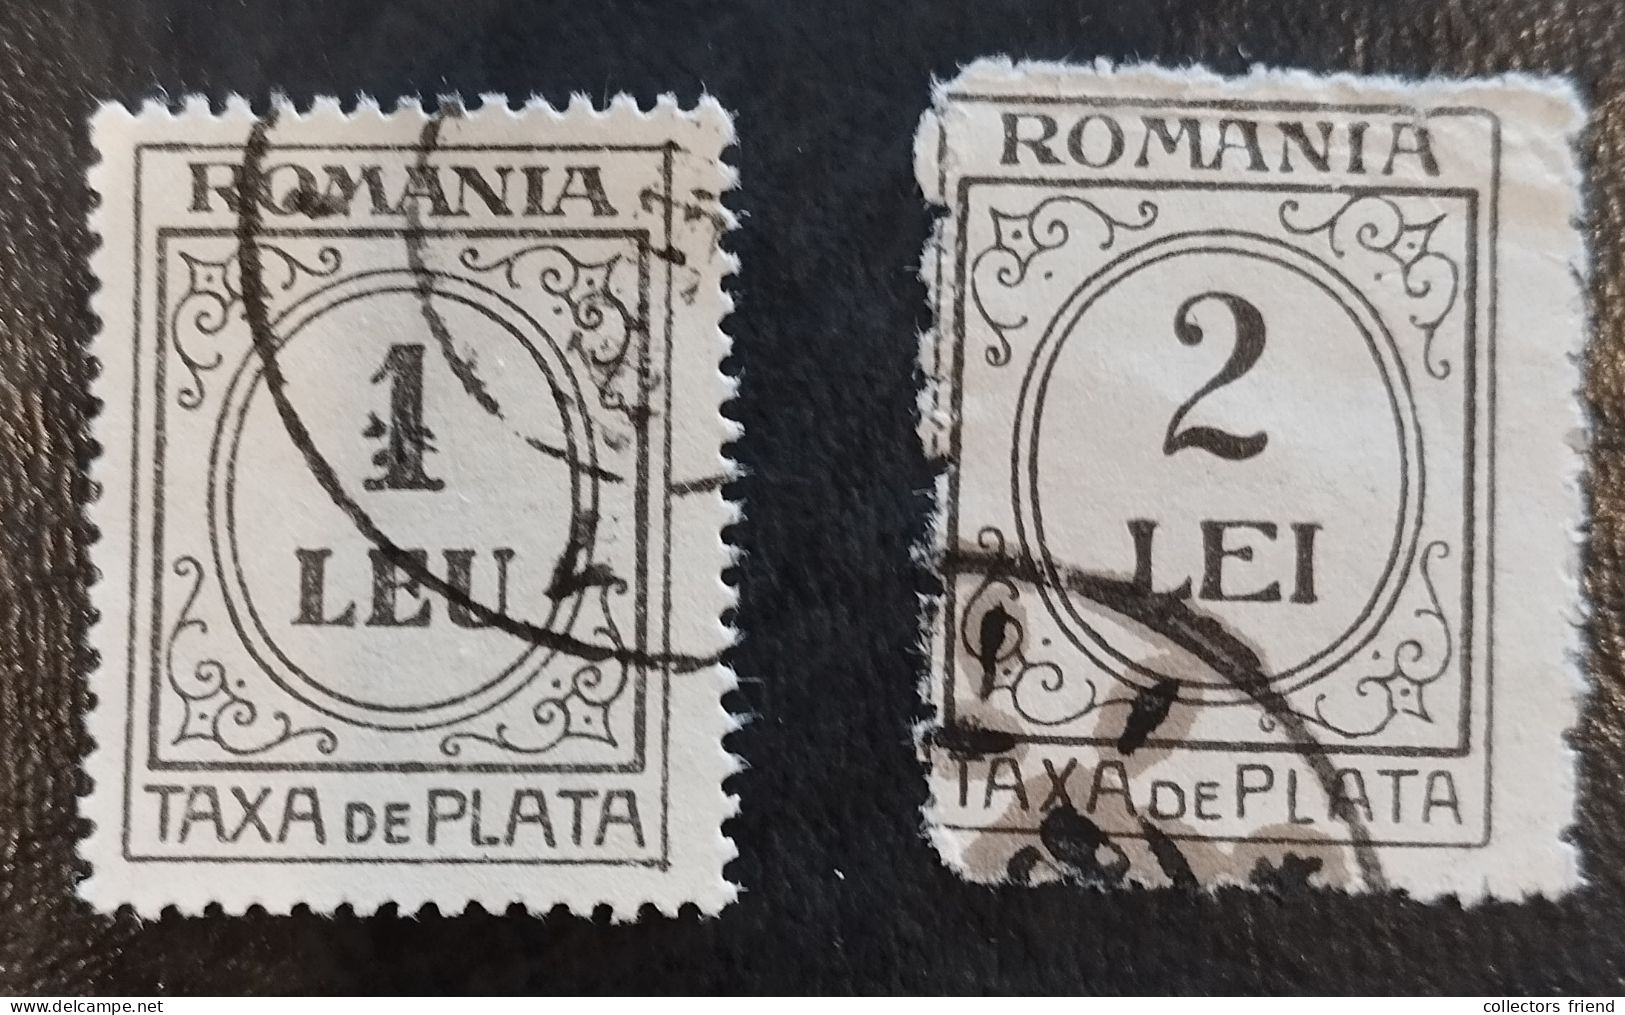 Romania Romana Rumänien - Taxa De Plata - 1 LEU +  2 LEI - Used - Usado